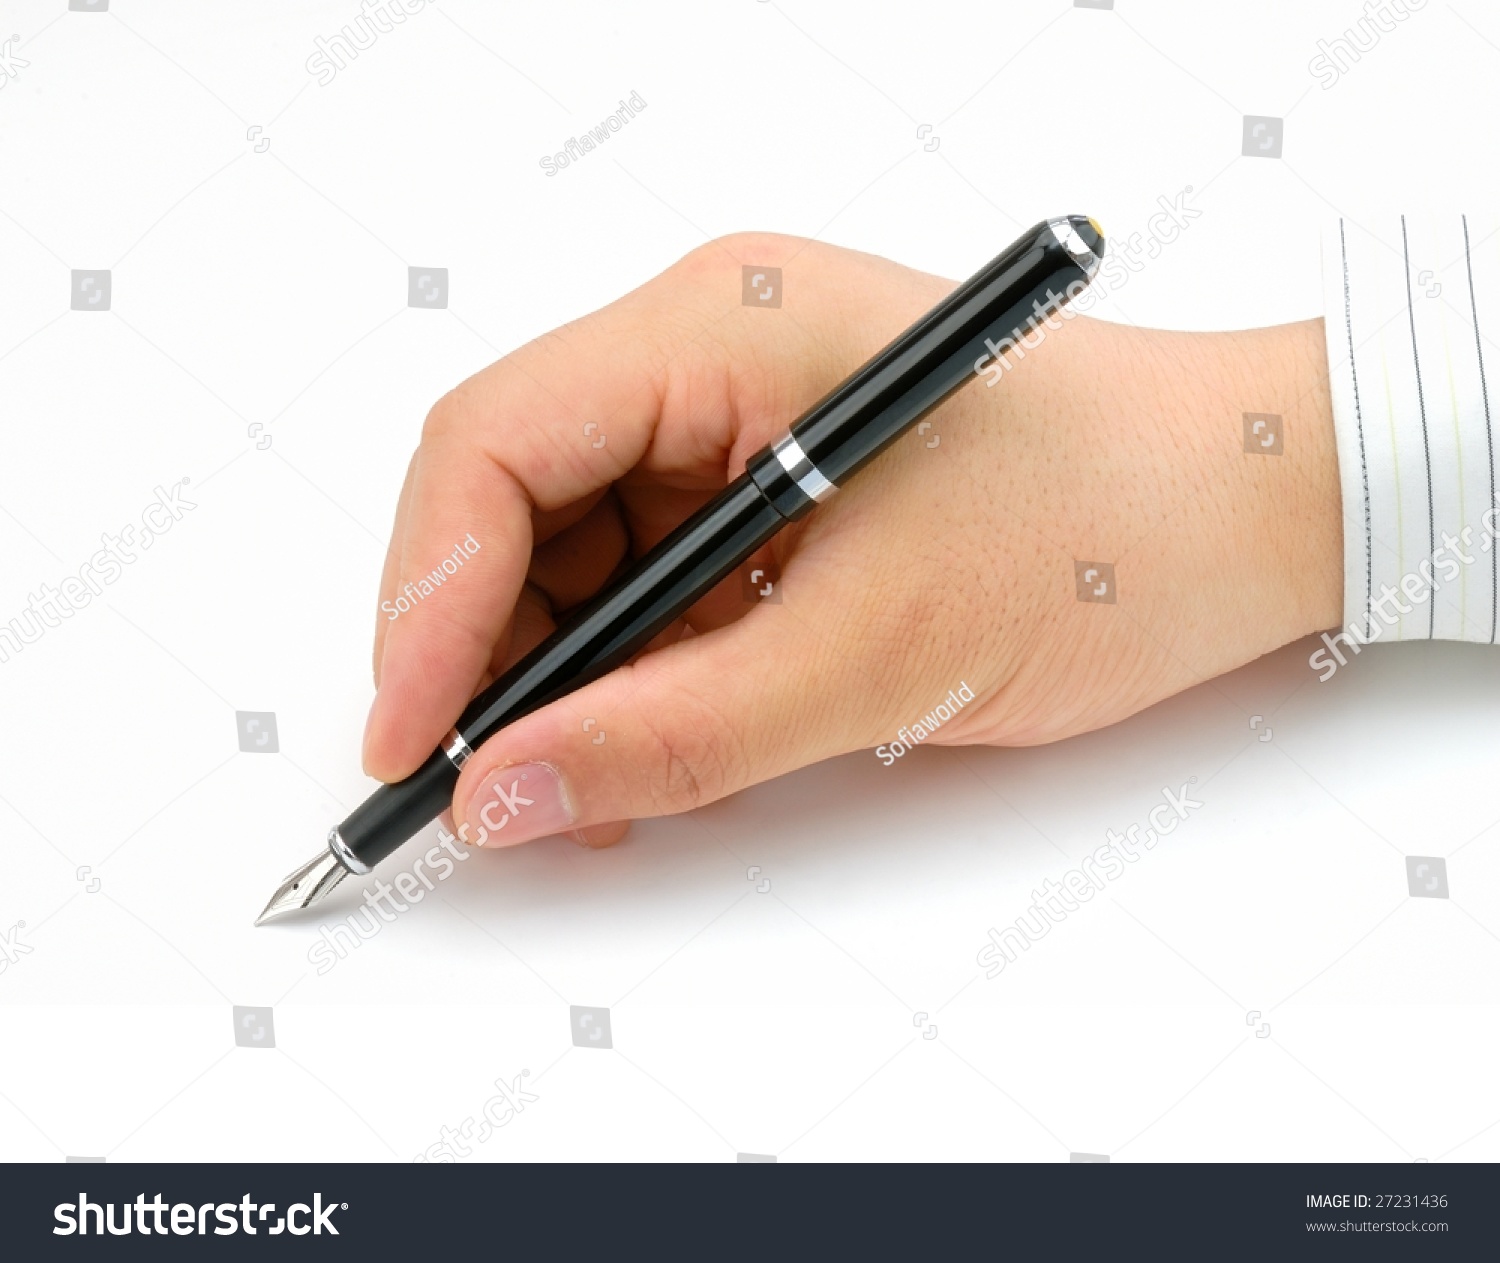 Custom Pens & Writing Instruments